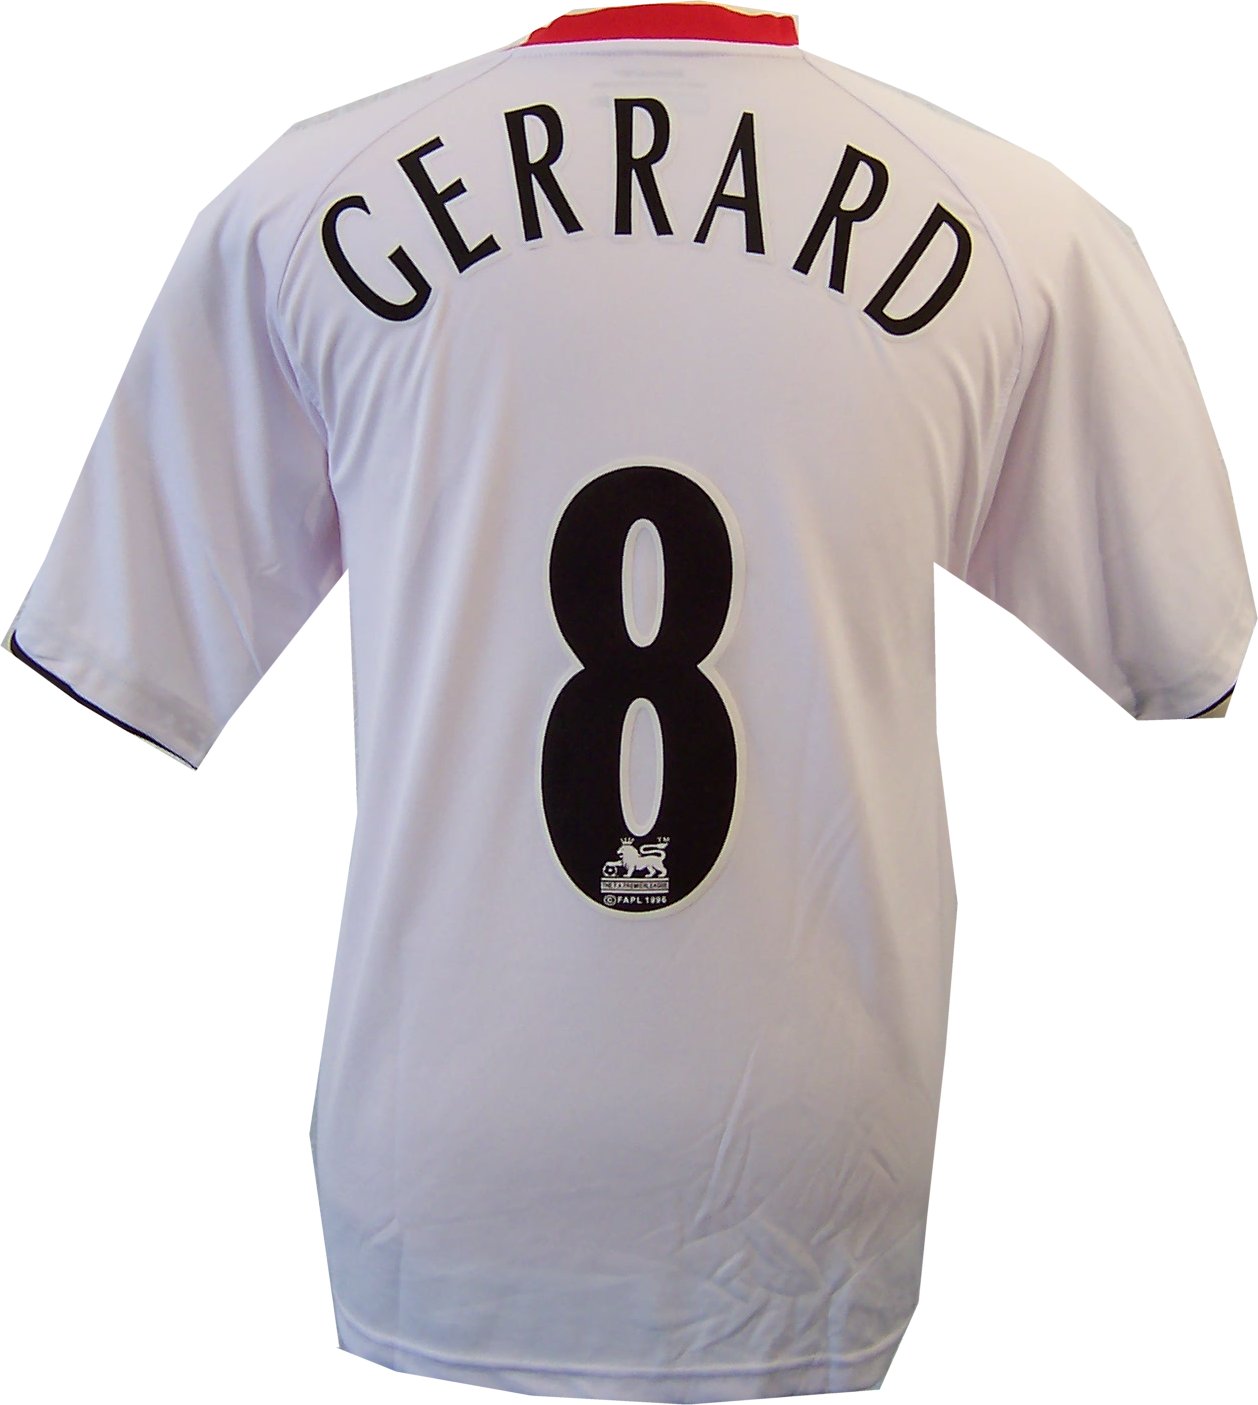 Reebok Liverpool away (Gerrard 8) 05/06